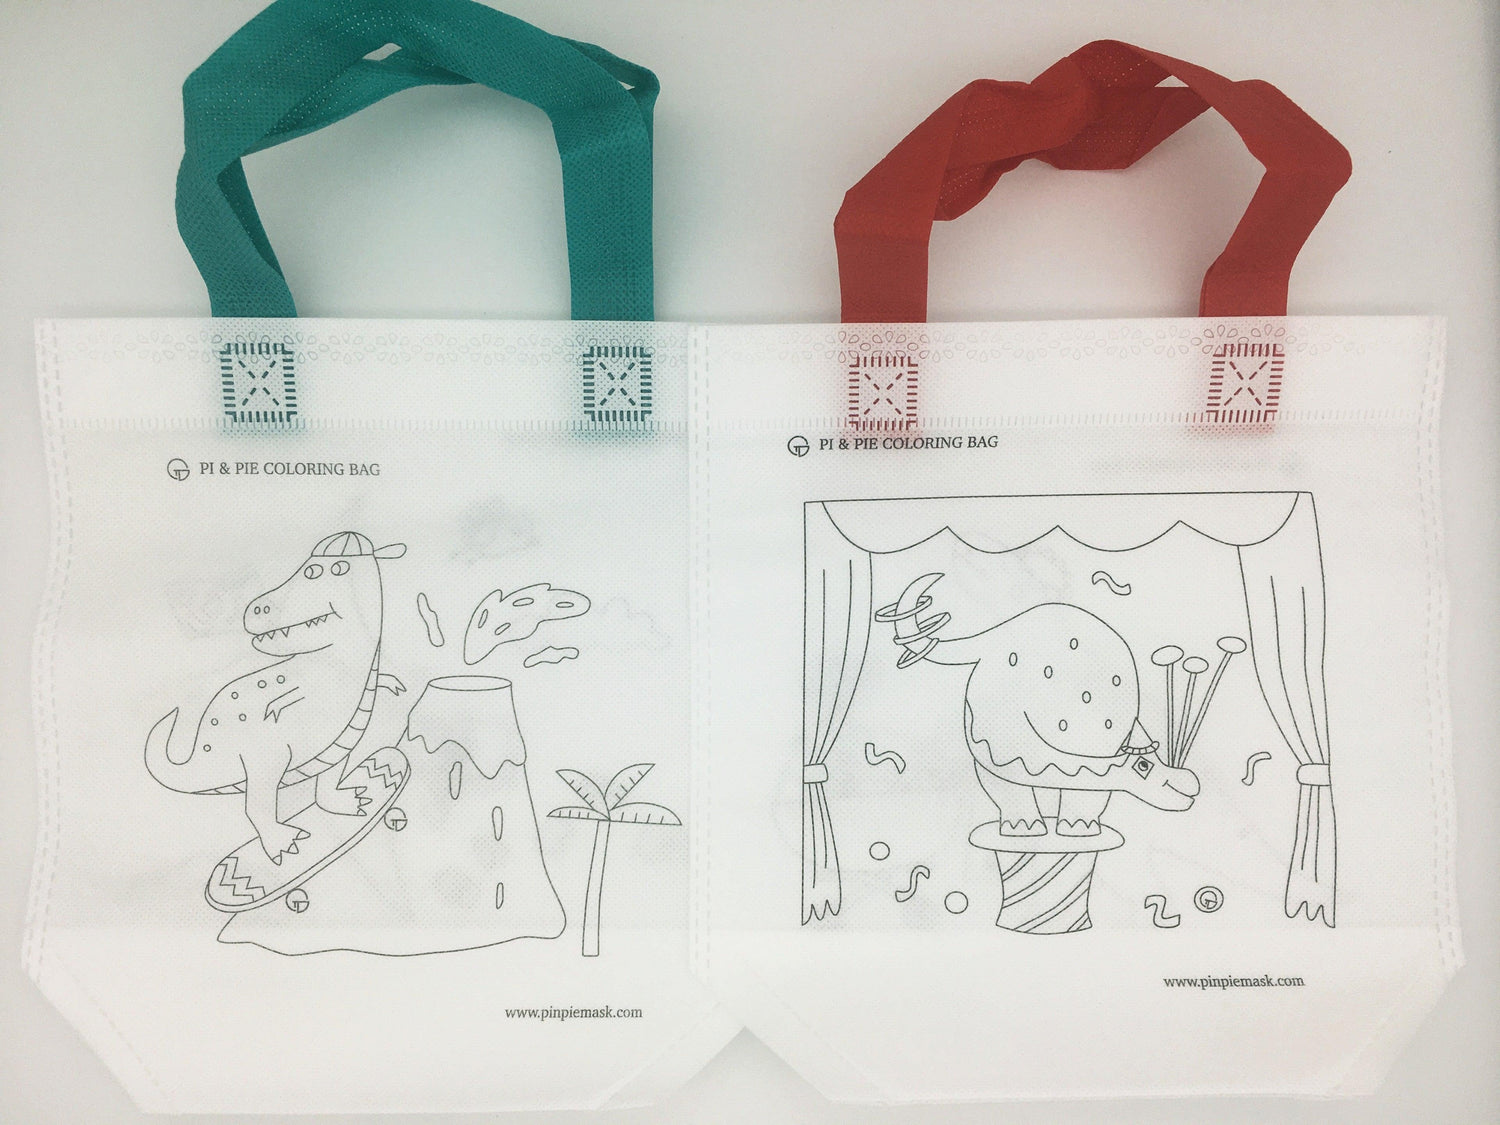 Pi & Pie Coloring Bag (4 bags) - {{ variant.title }} - Pi & Pie Mask LLC